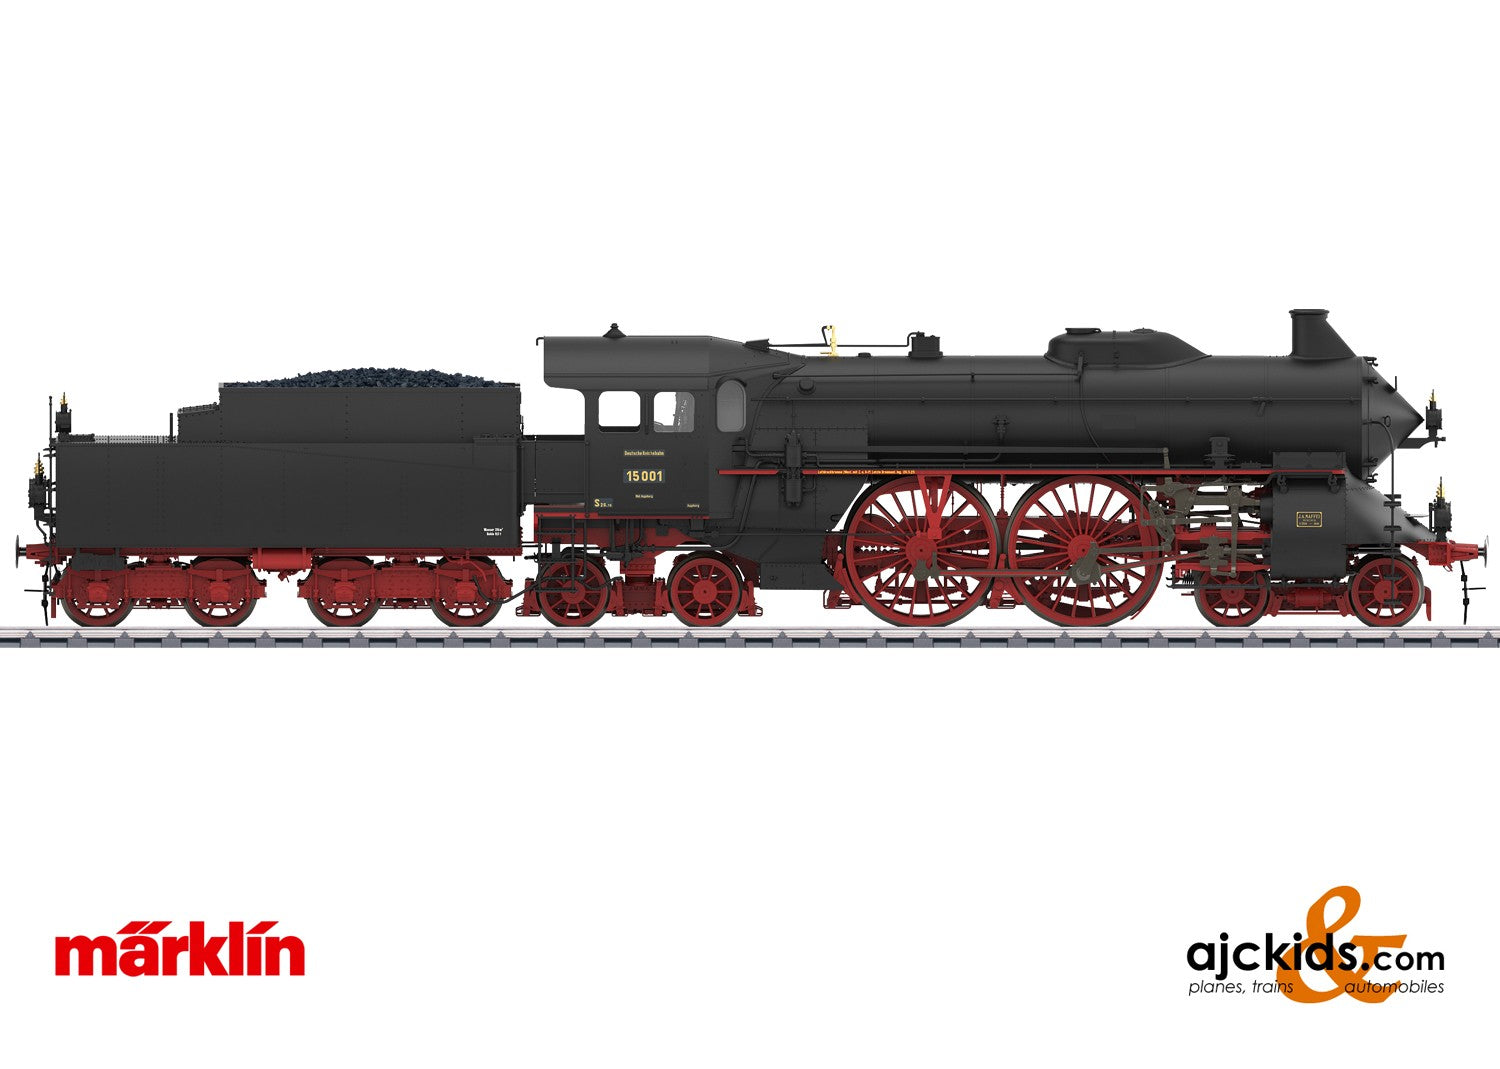 Marklin 55166 - Class 15 Steam Locomotive, EAN 4001883551661 at Ajckids.com